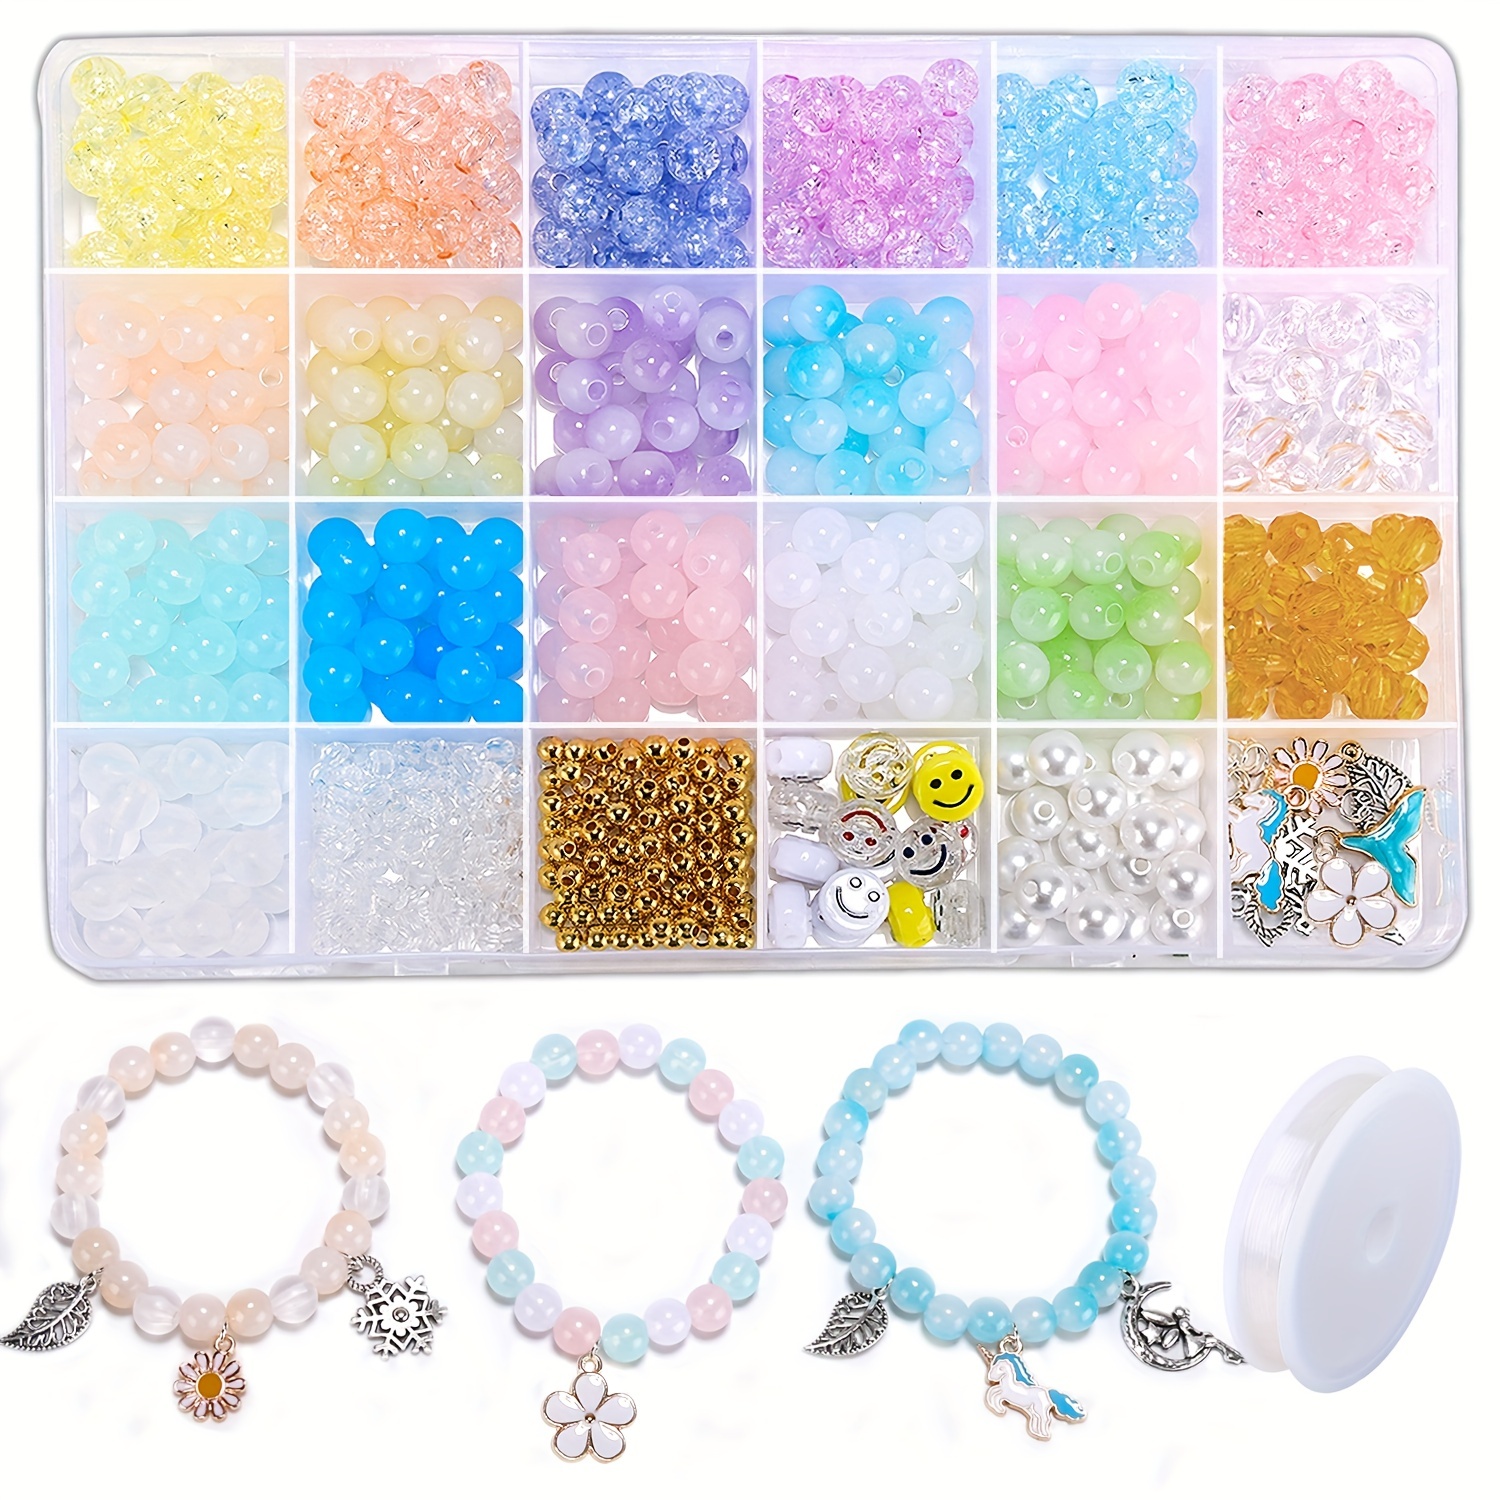  6000pcs Big Box Bracelet Making Kit for Girls with